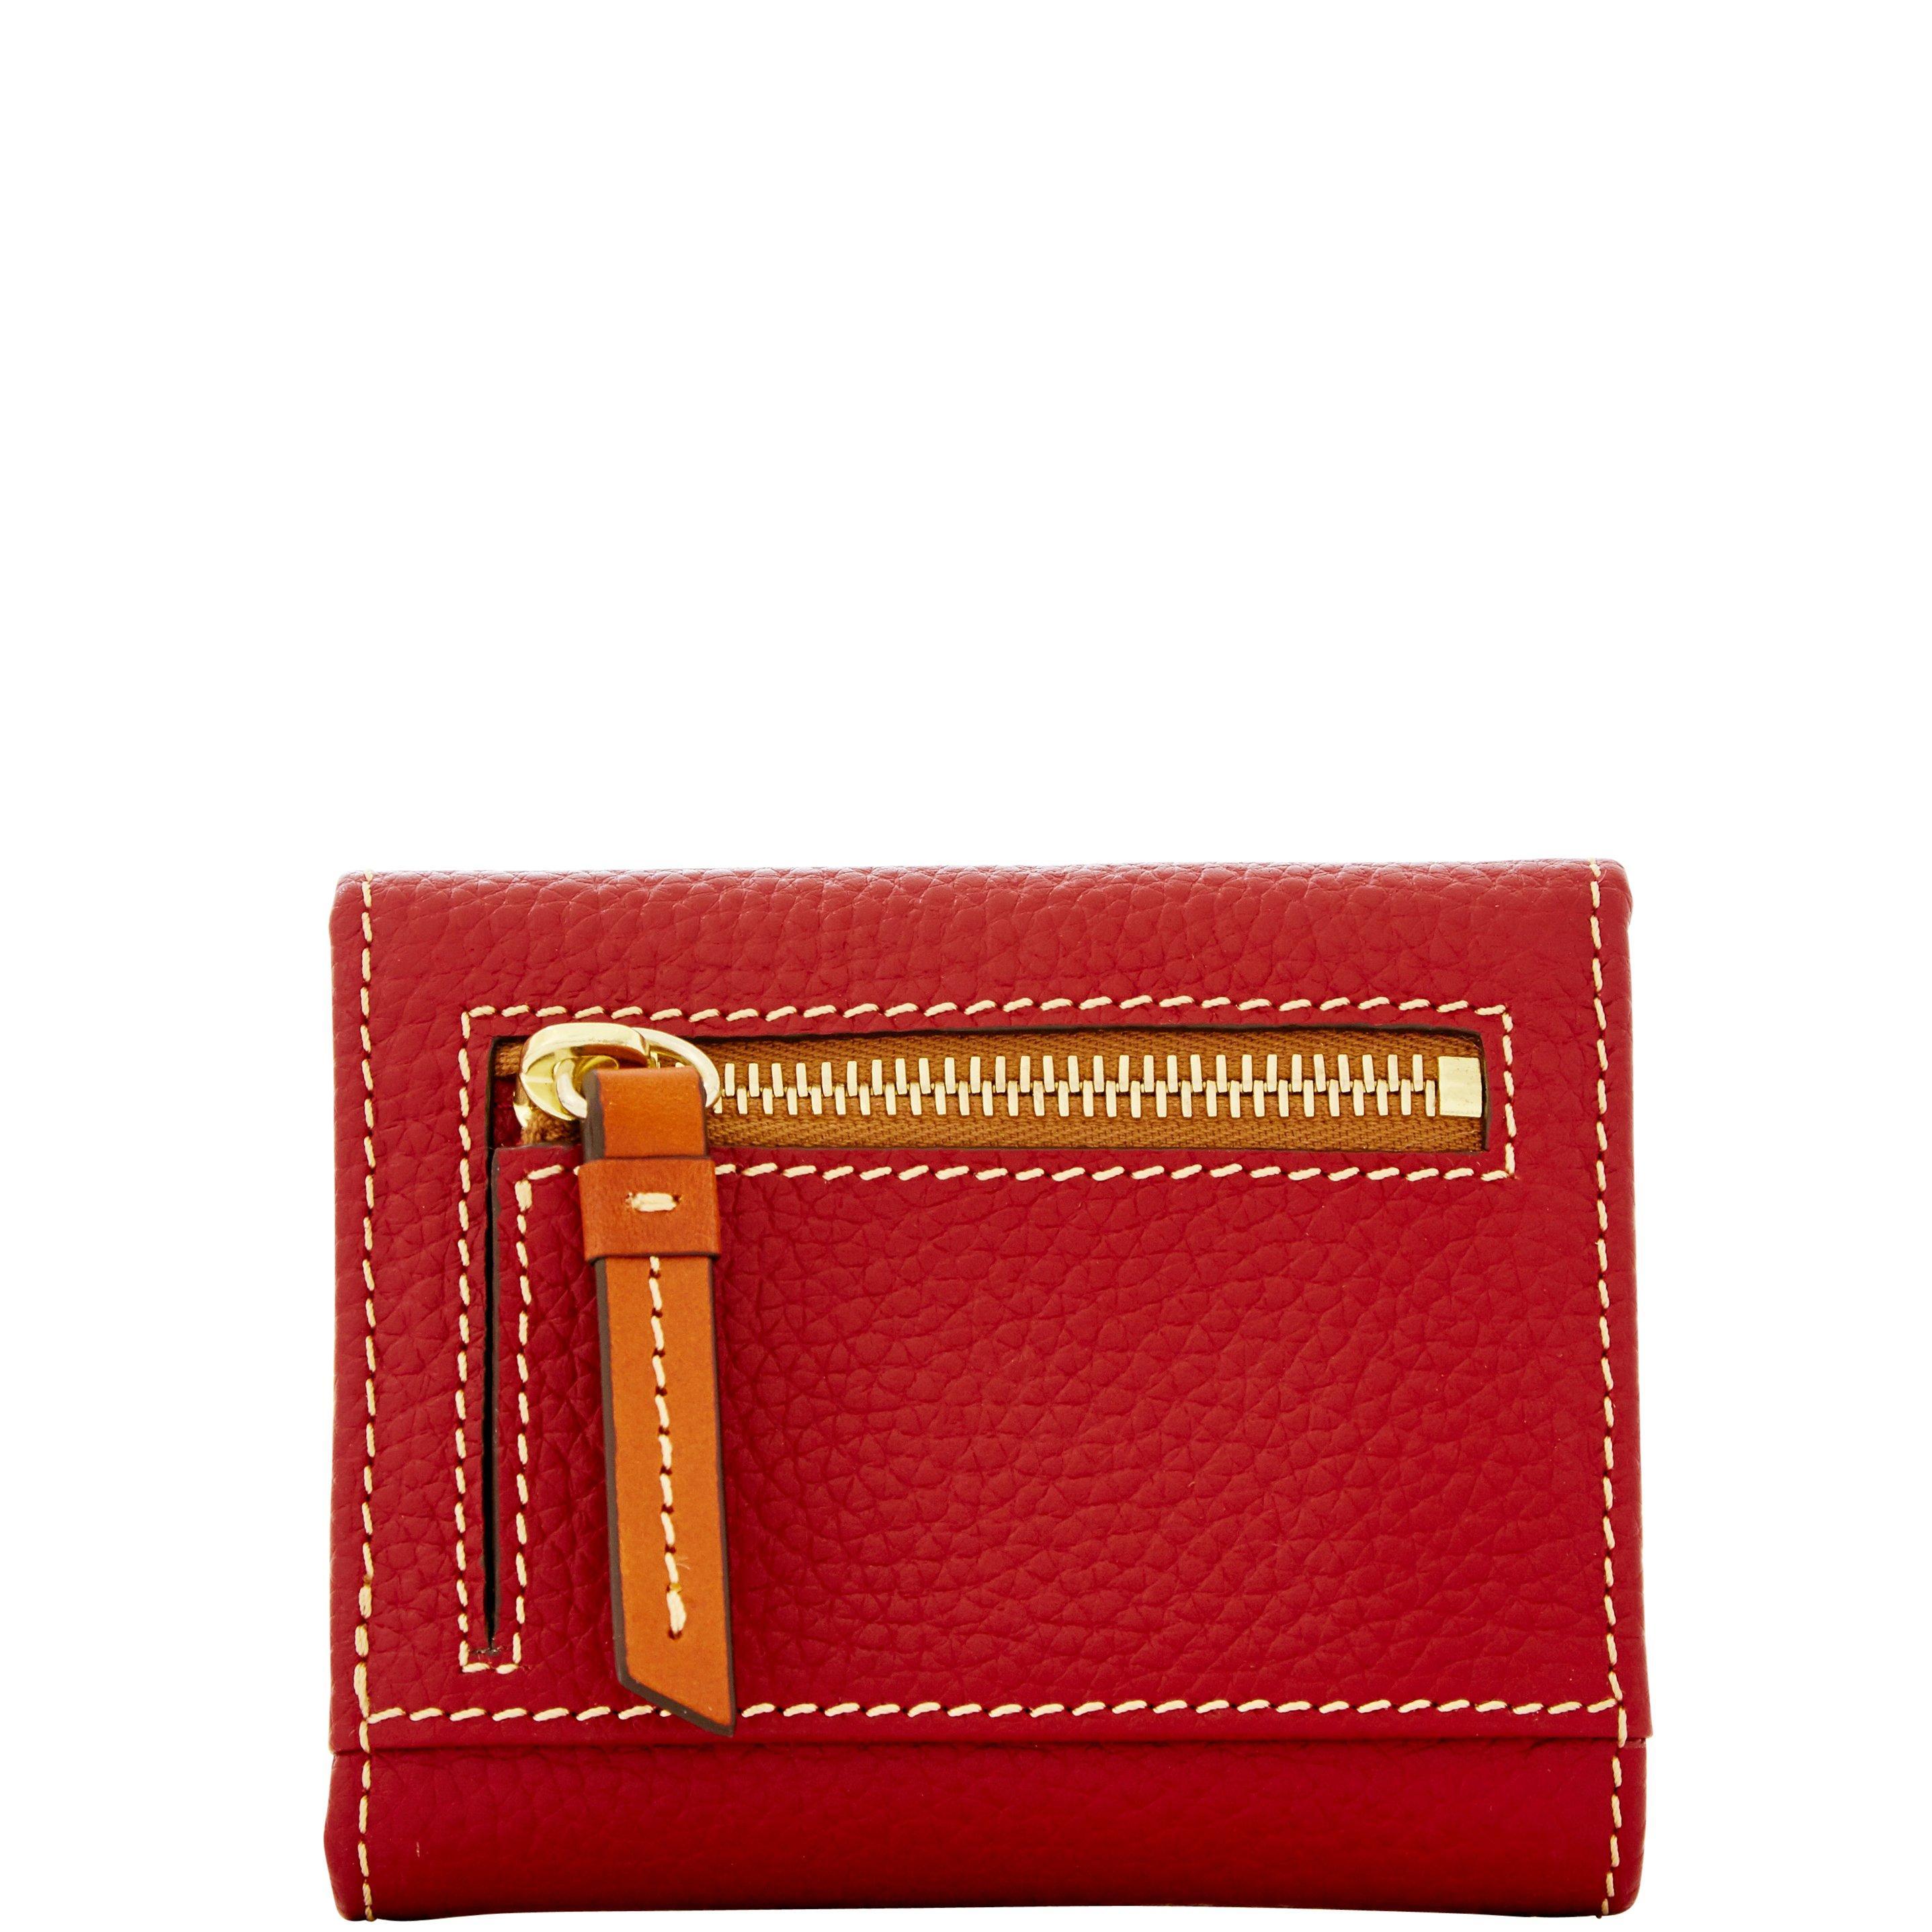 Dooney & Bourke Leather Pebble Grain Small Flap Wallet in Red - Lyst